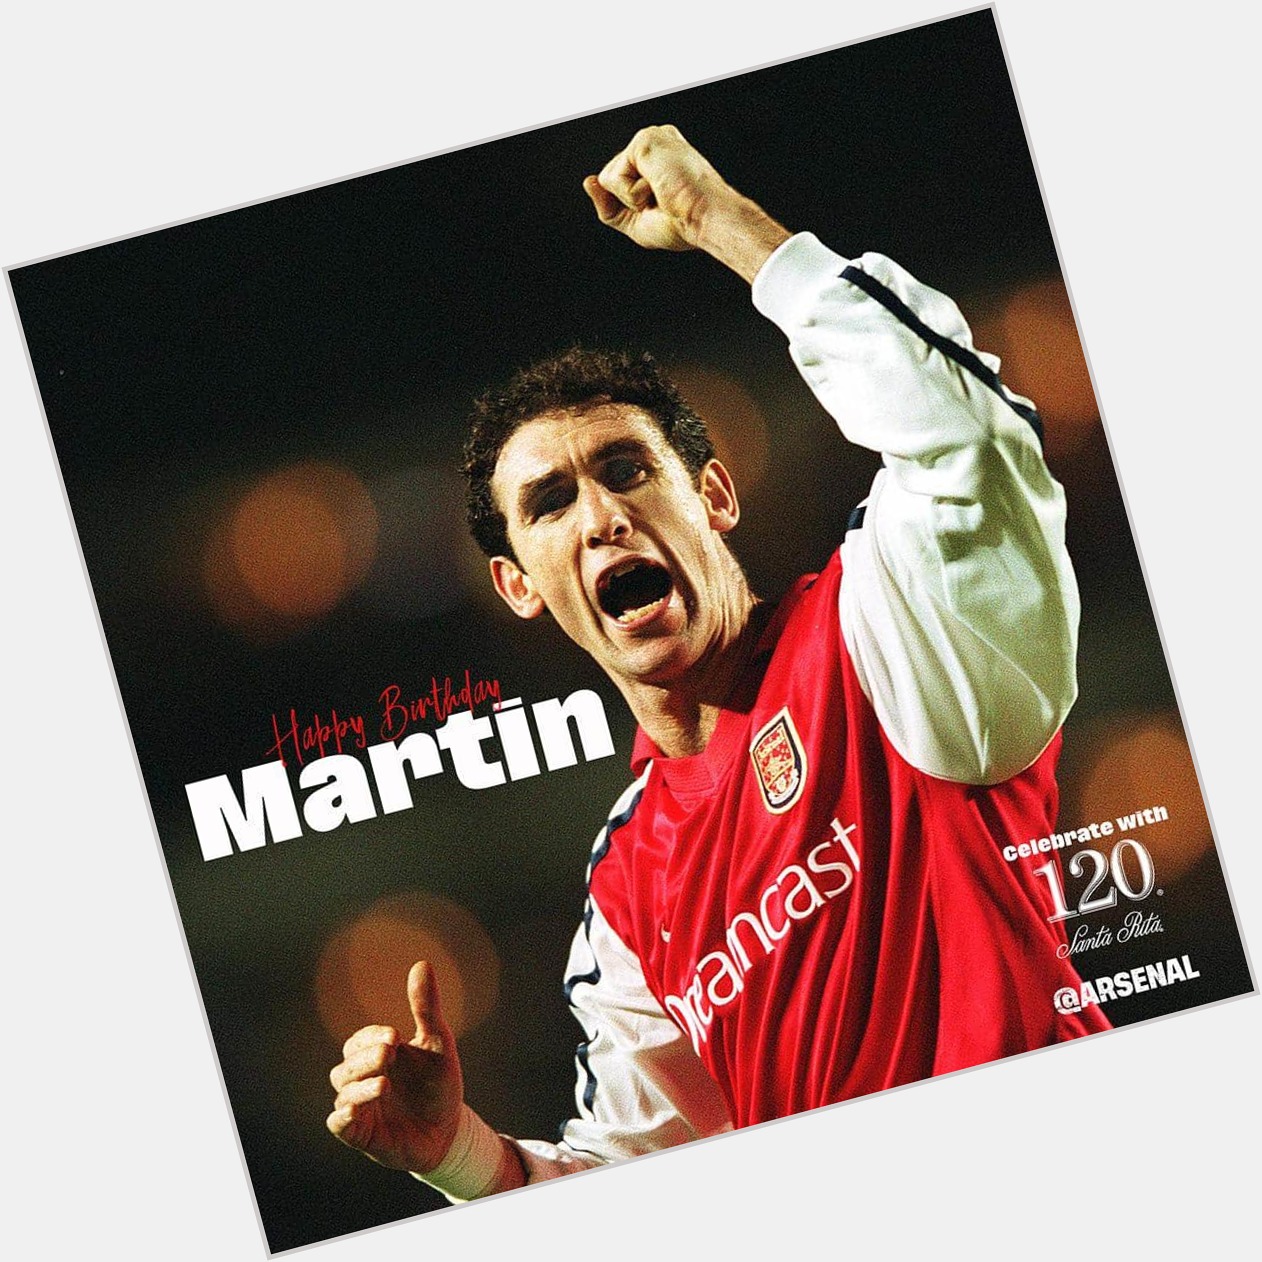 Happy birthday to a true Arsenal legend, Martin Keown! 